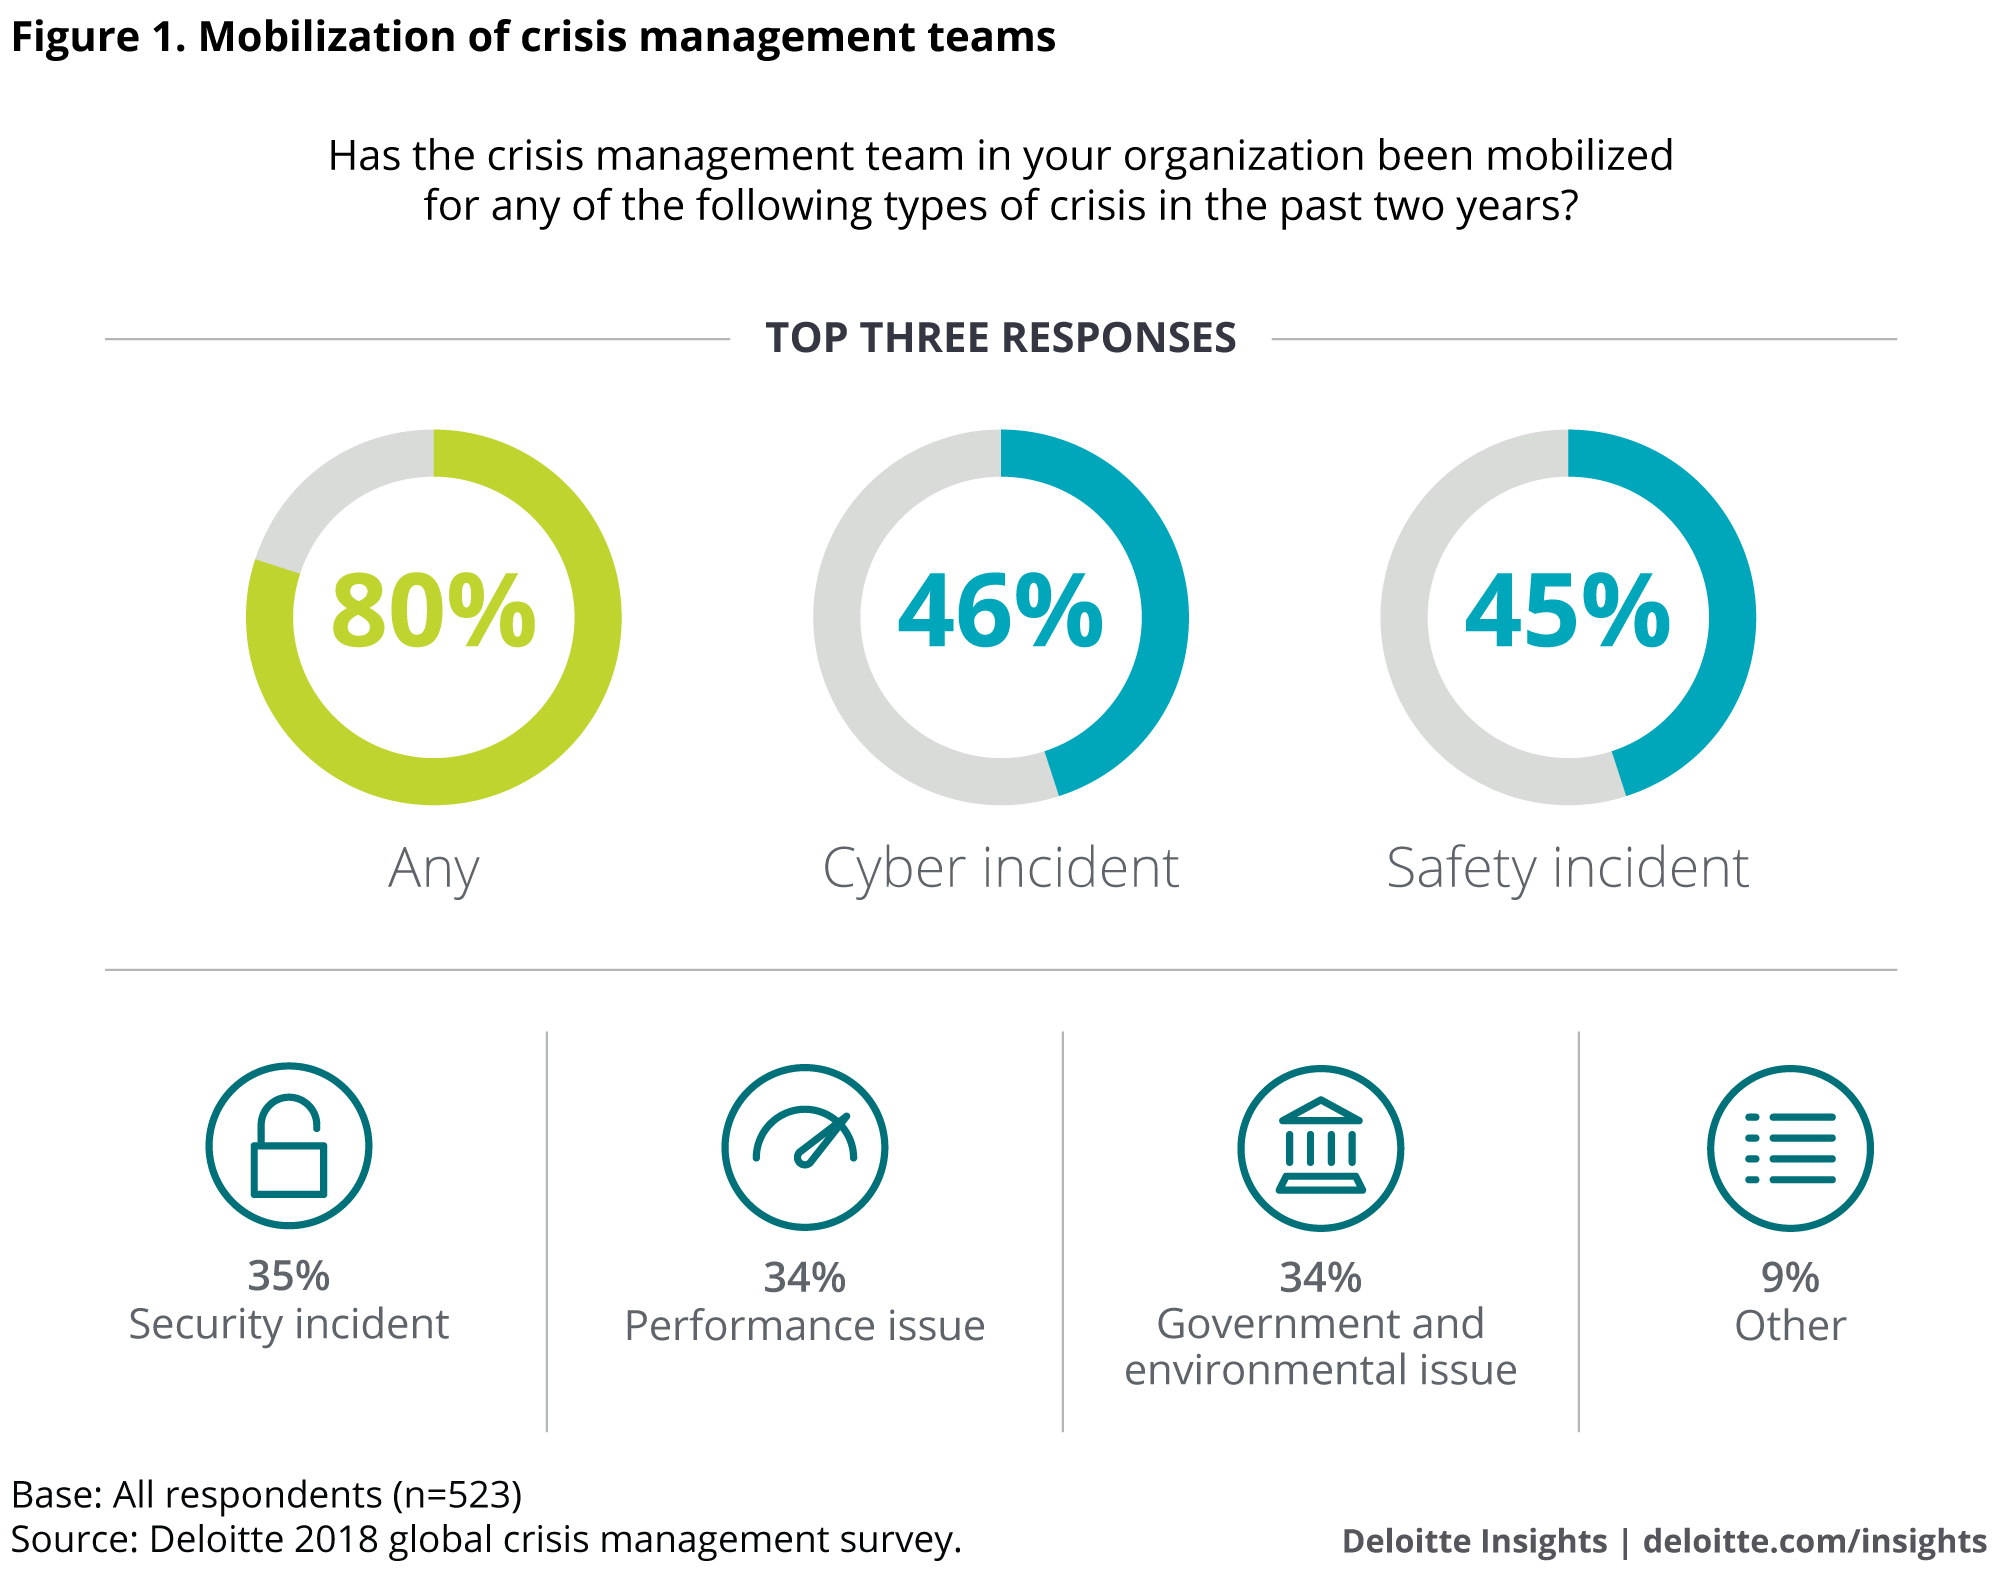 Mobilization of crisis management teams